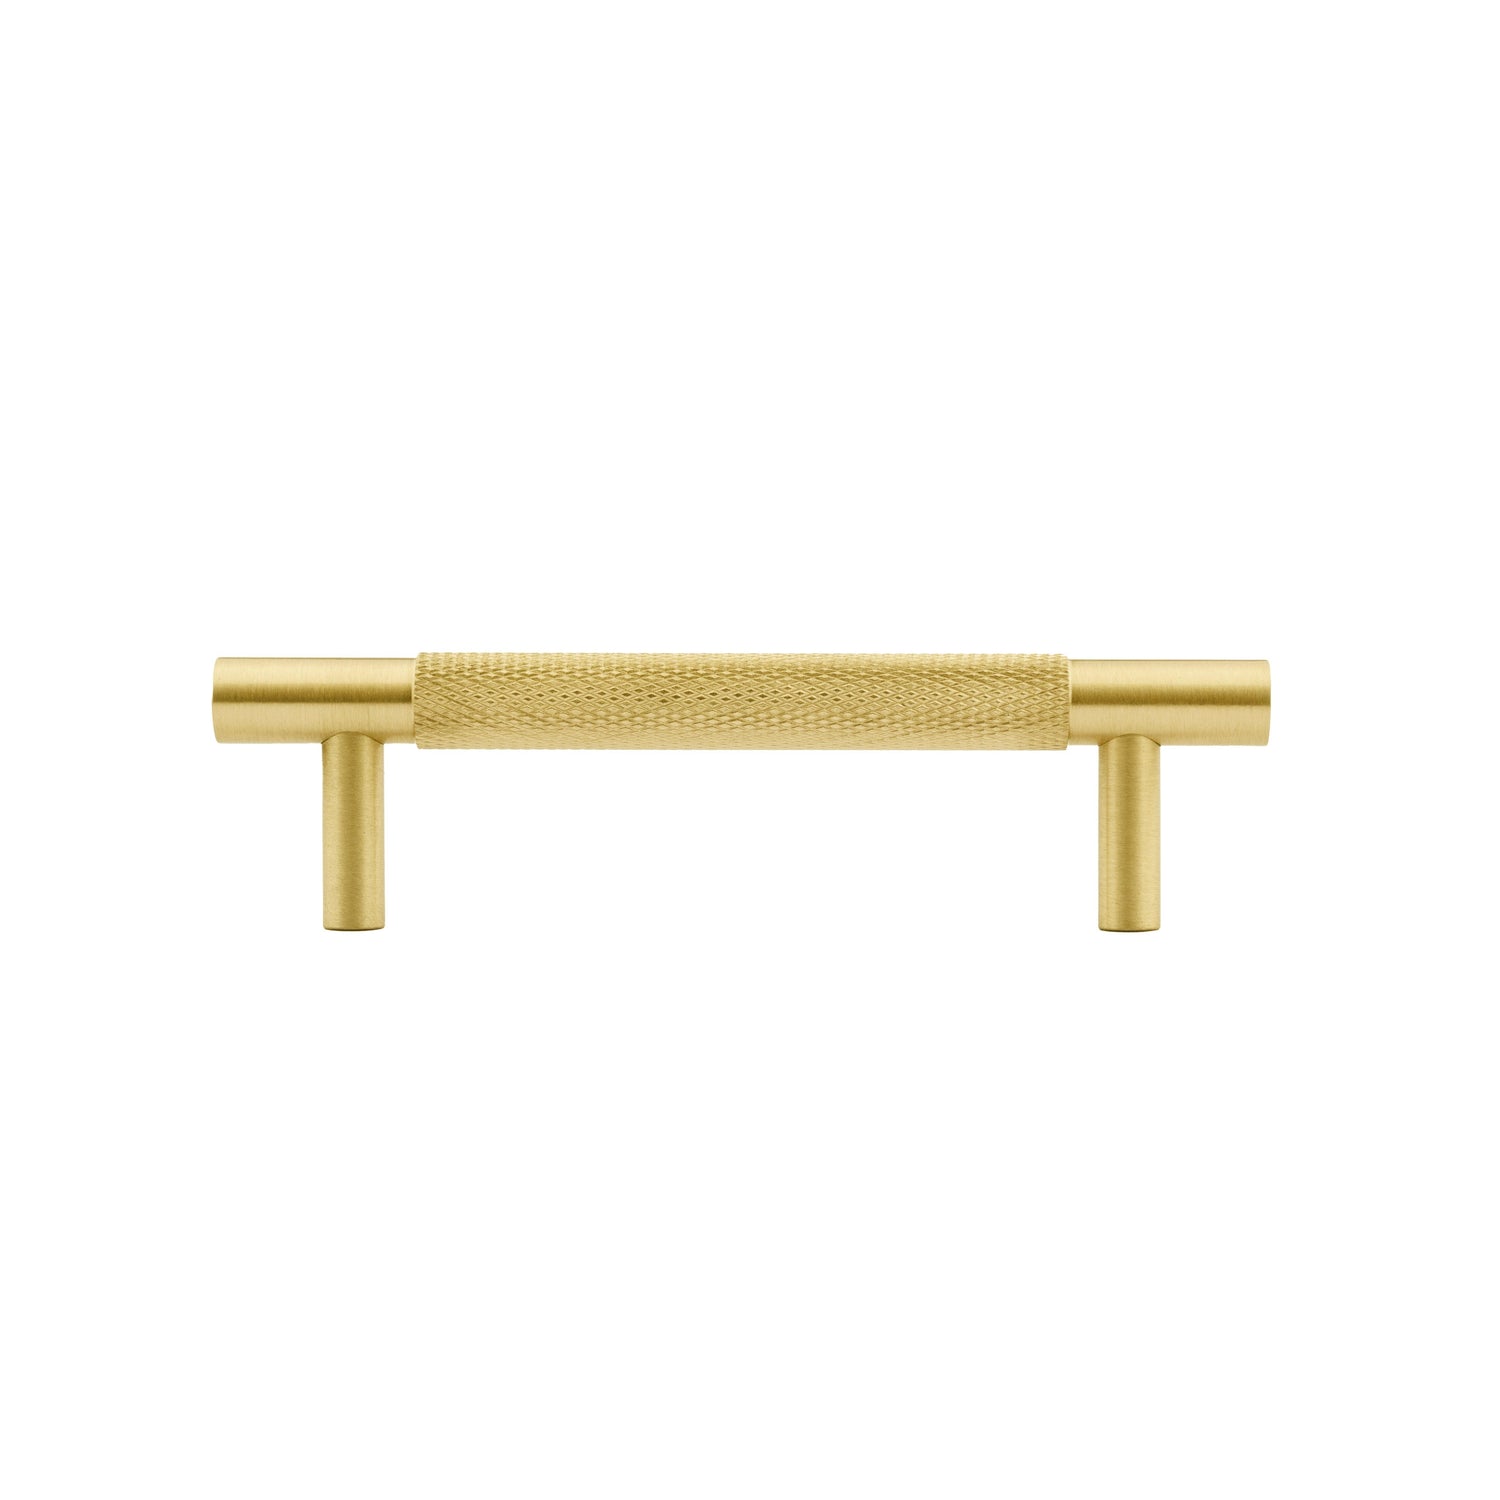 Pisa Knob Handles 130mm / Gold / Brass - M A N T A R A